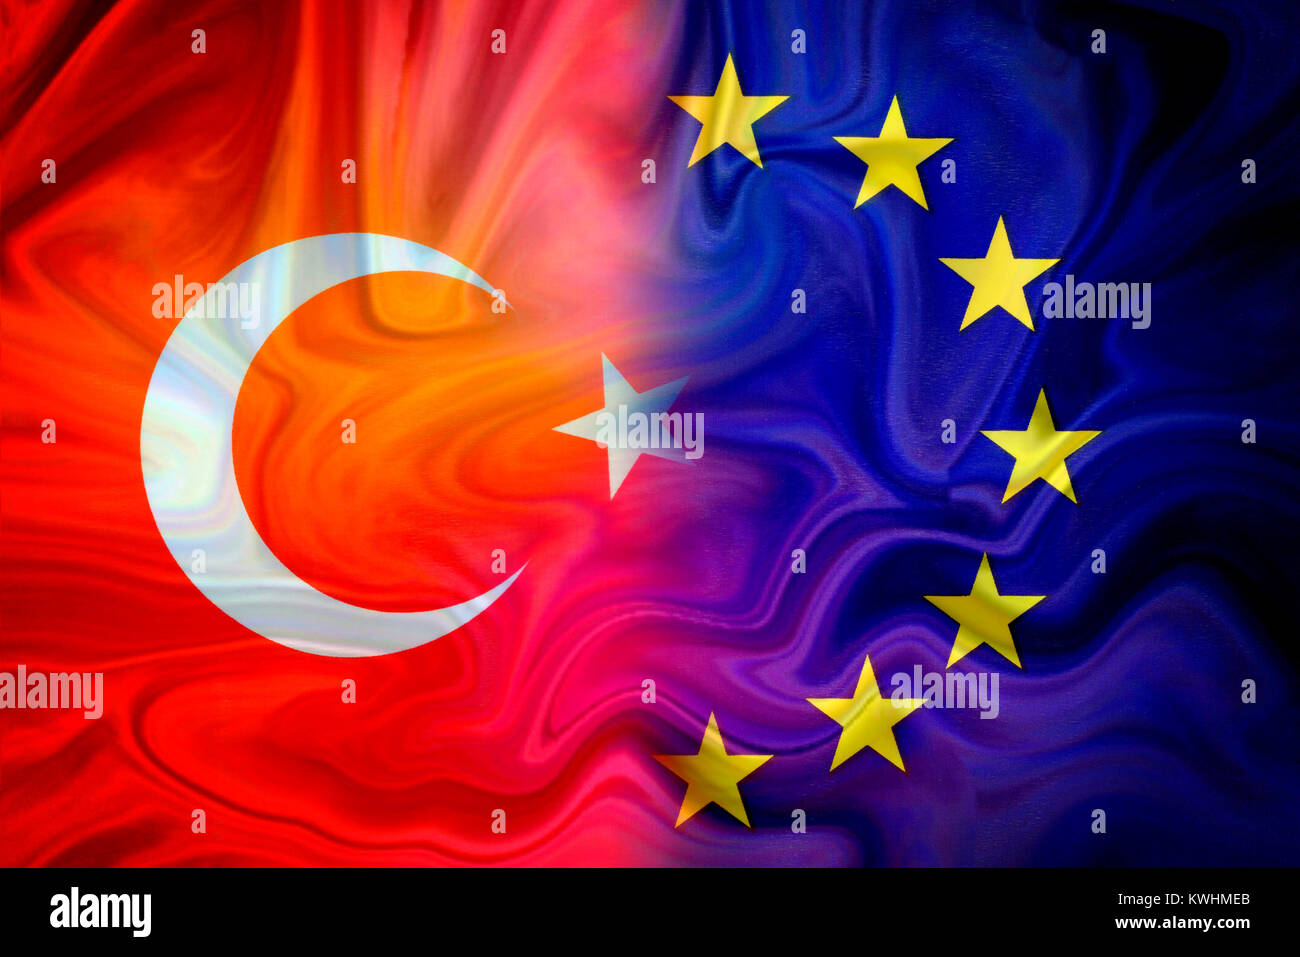 Flags of Turkey and the EU, Fahnen von Tuerkei und EU Stock Photo